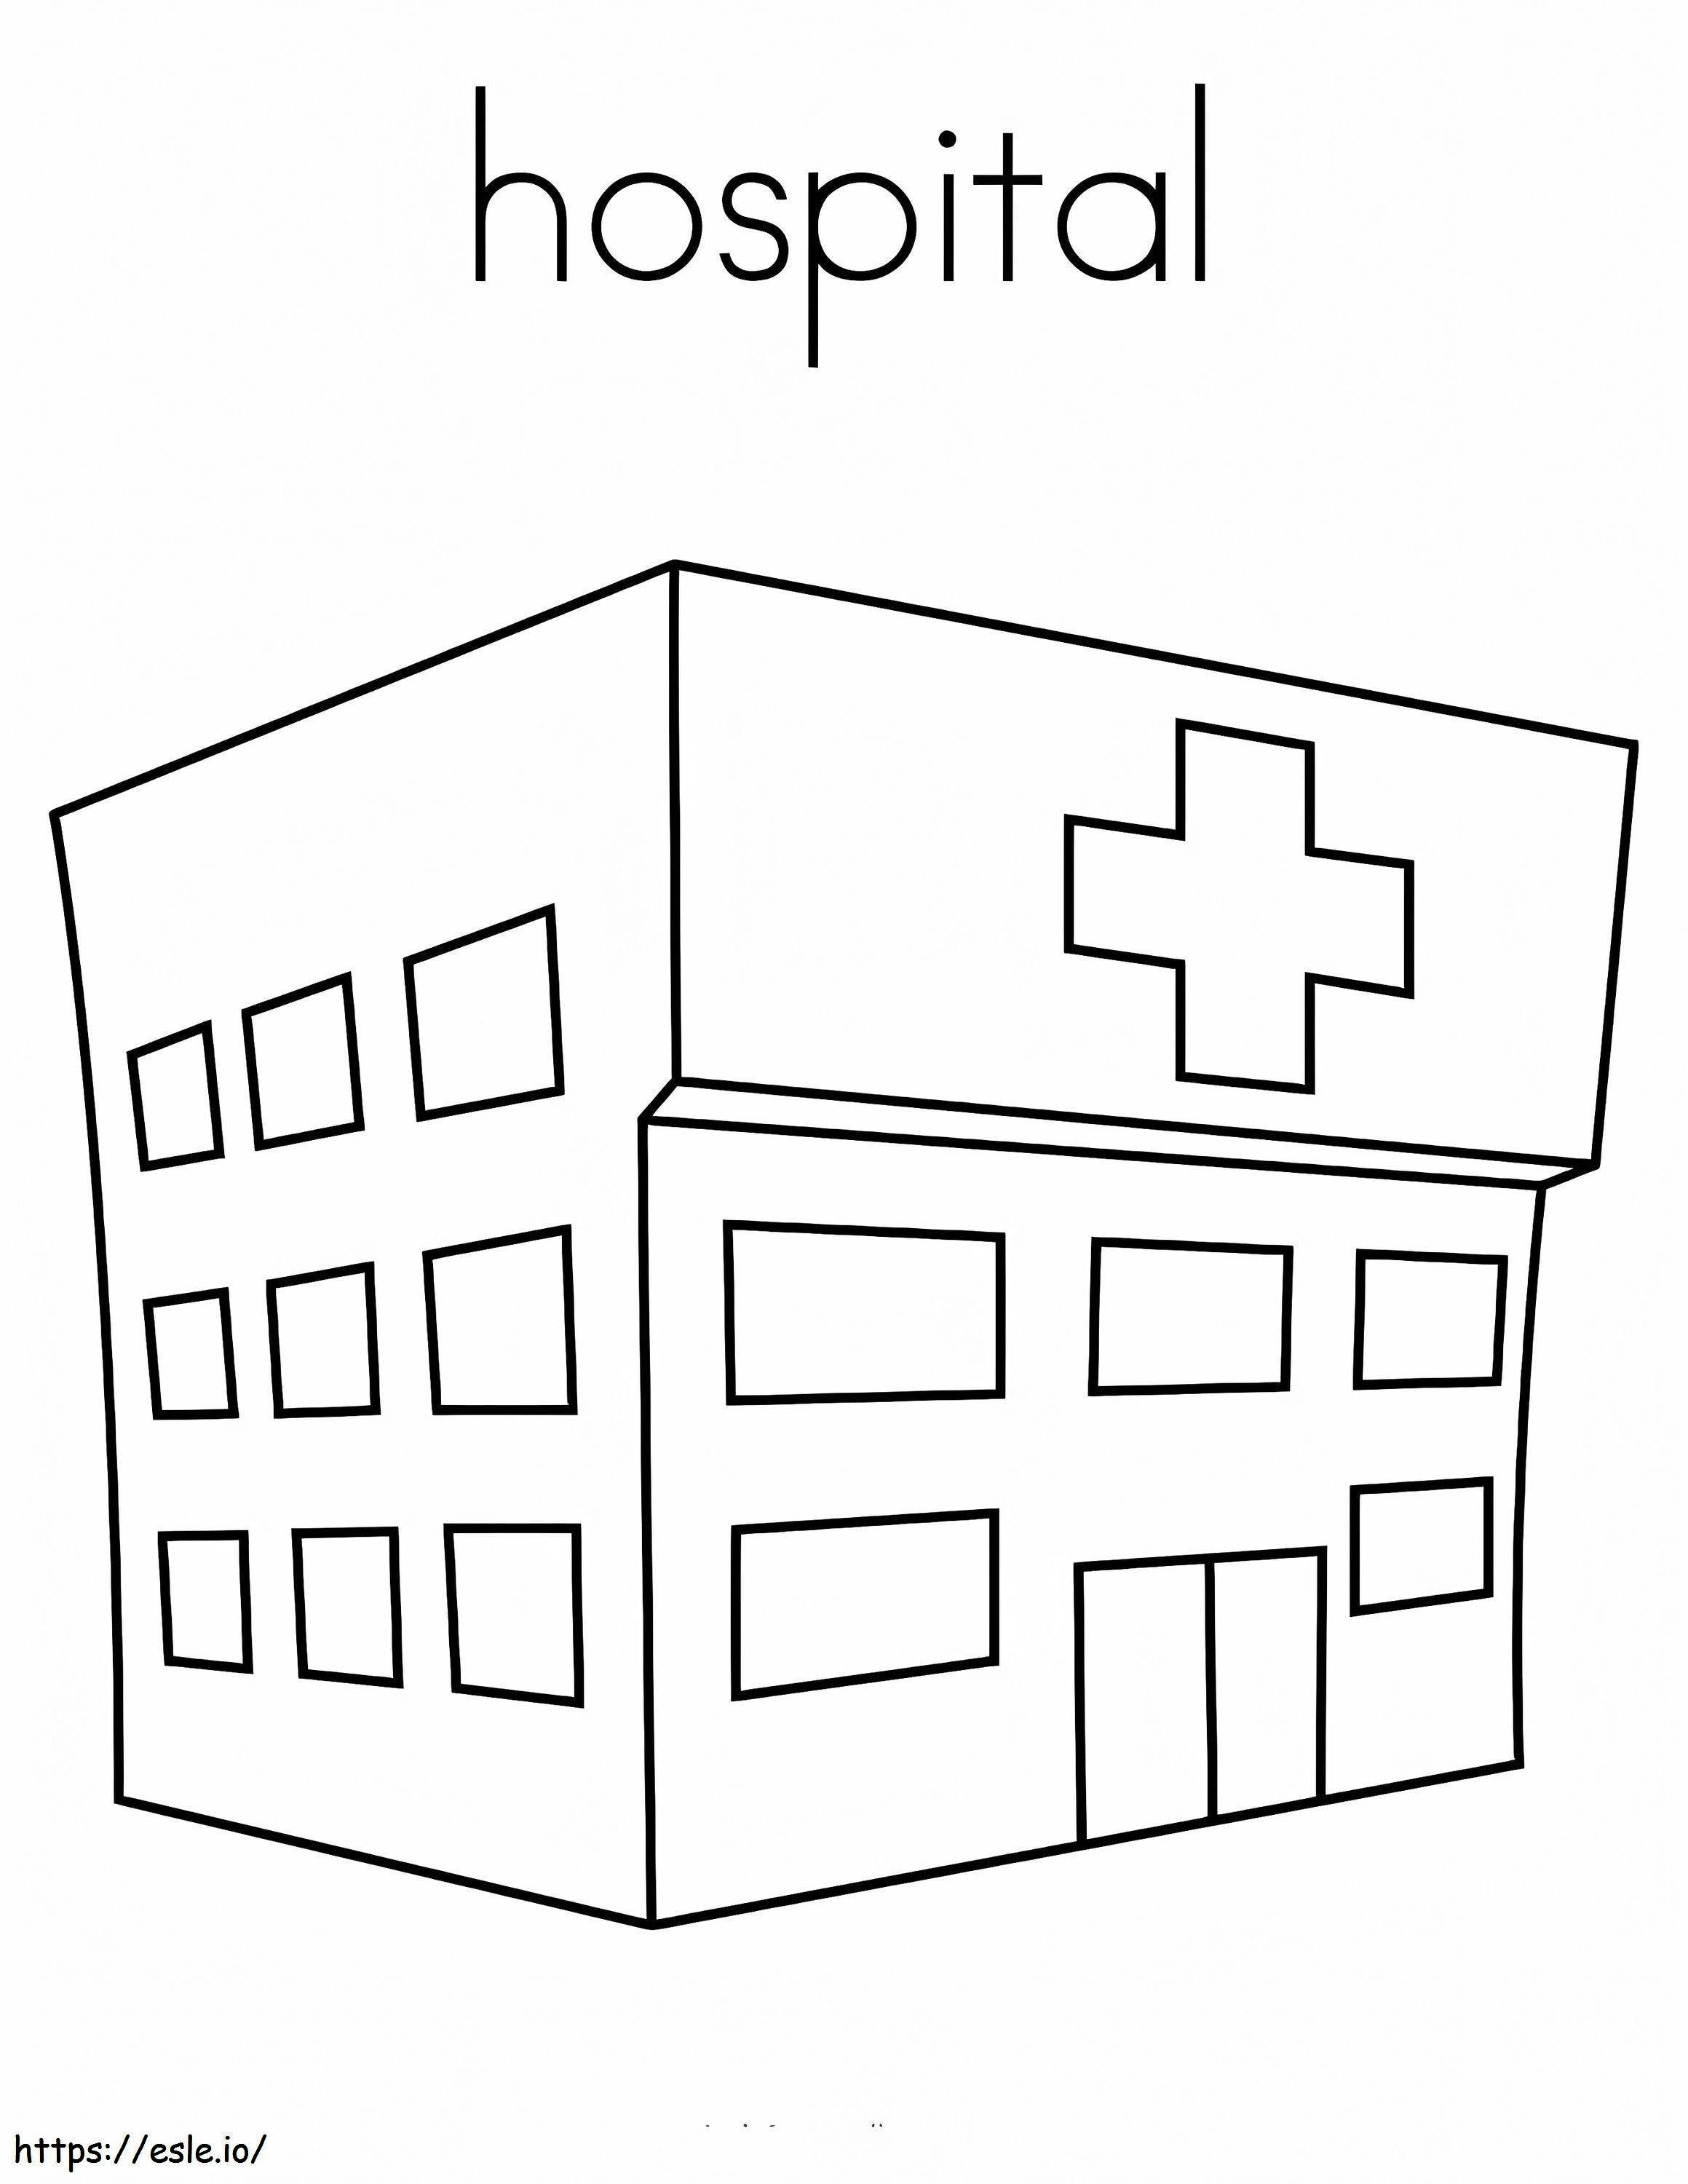 hospital sencillo para colorear